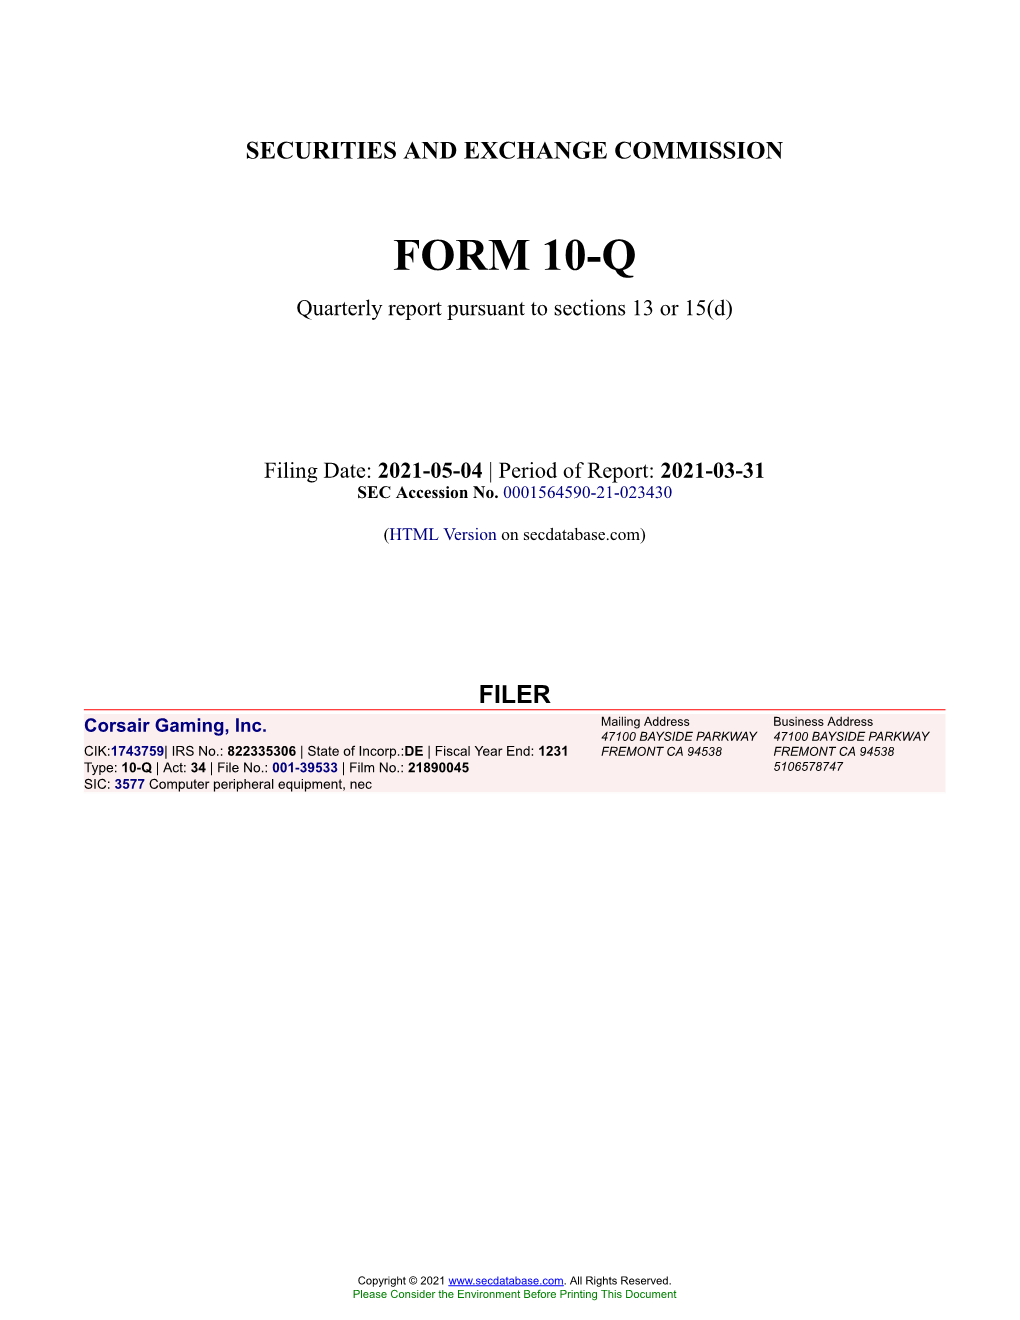 Corsair Gaming, Inc. Form 10-Q Quarterly Report Filed 2021-05-04